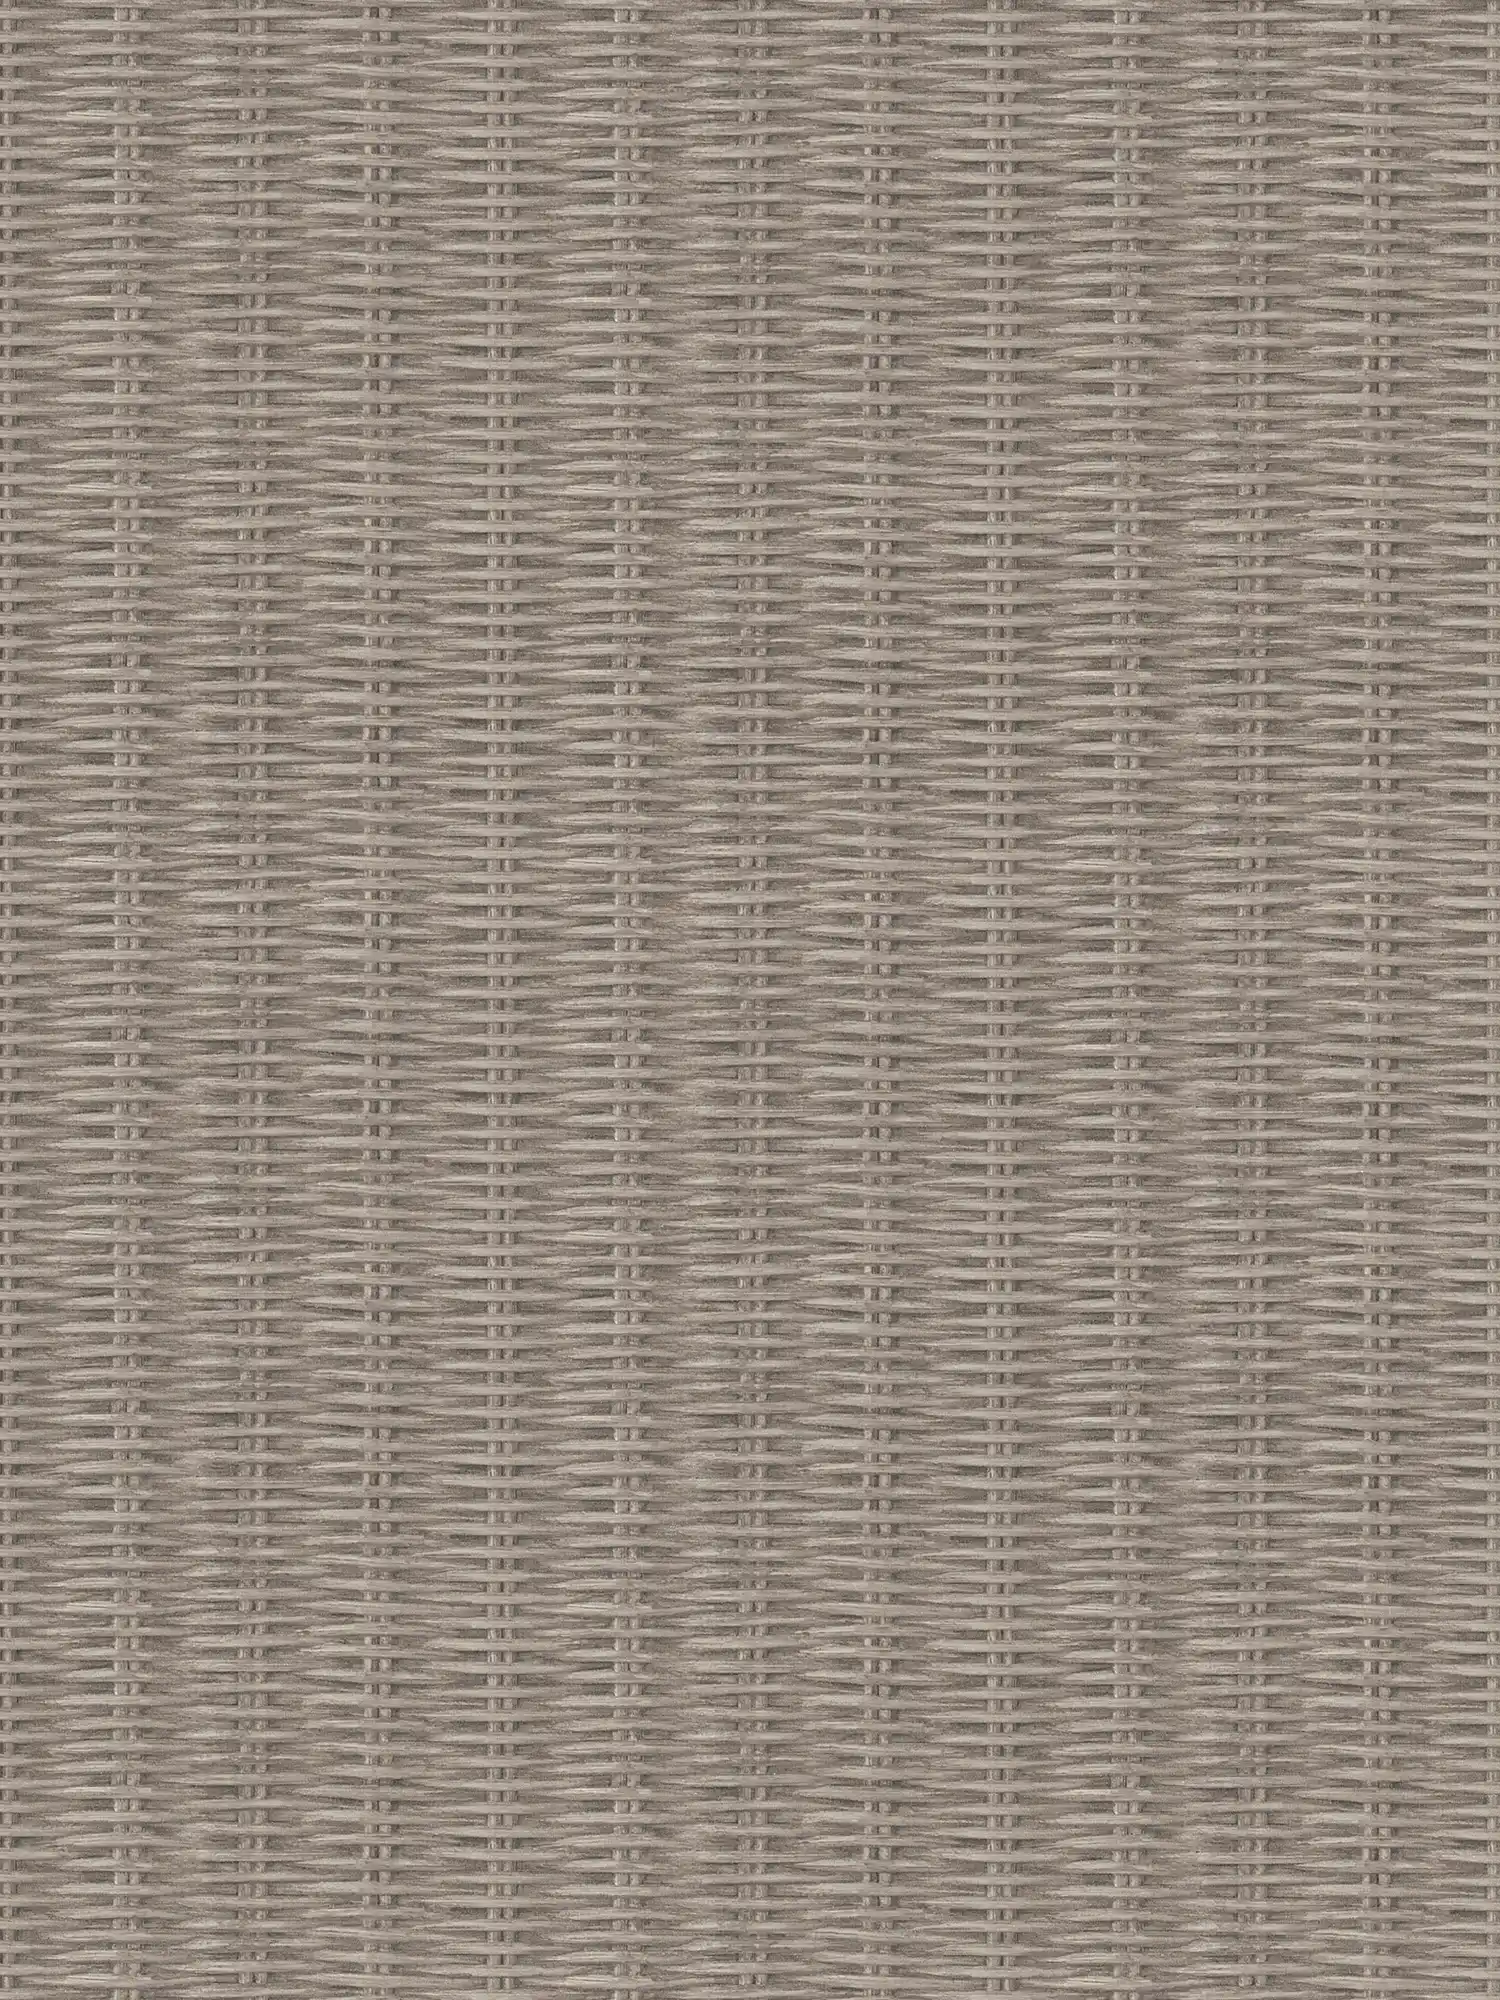 Non-woven wallpaper basket weave, natural look - brown, beige
